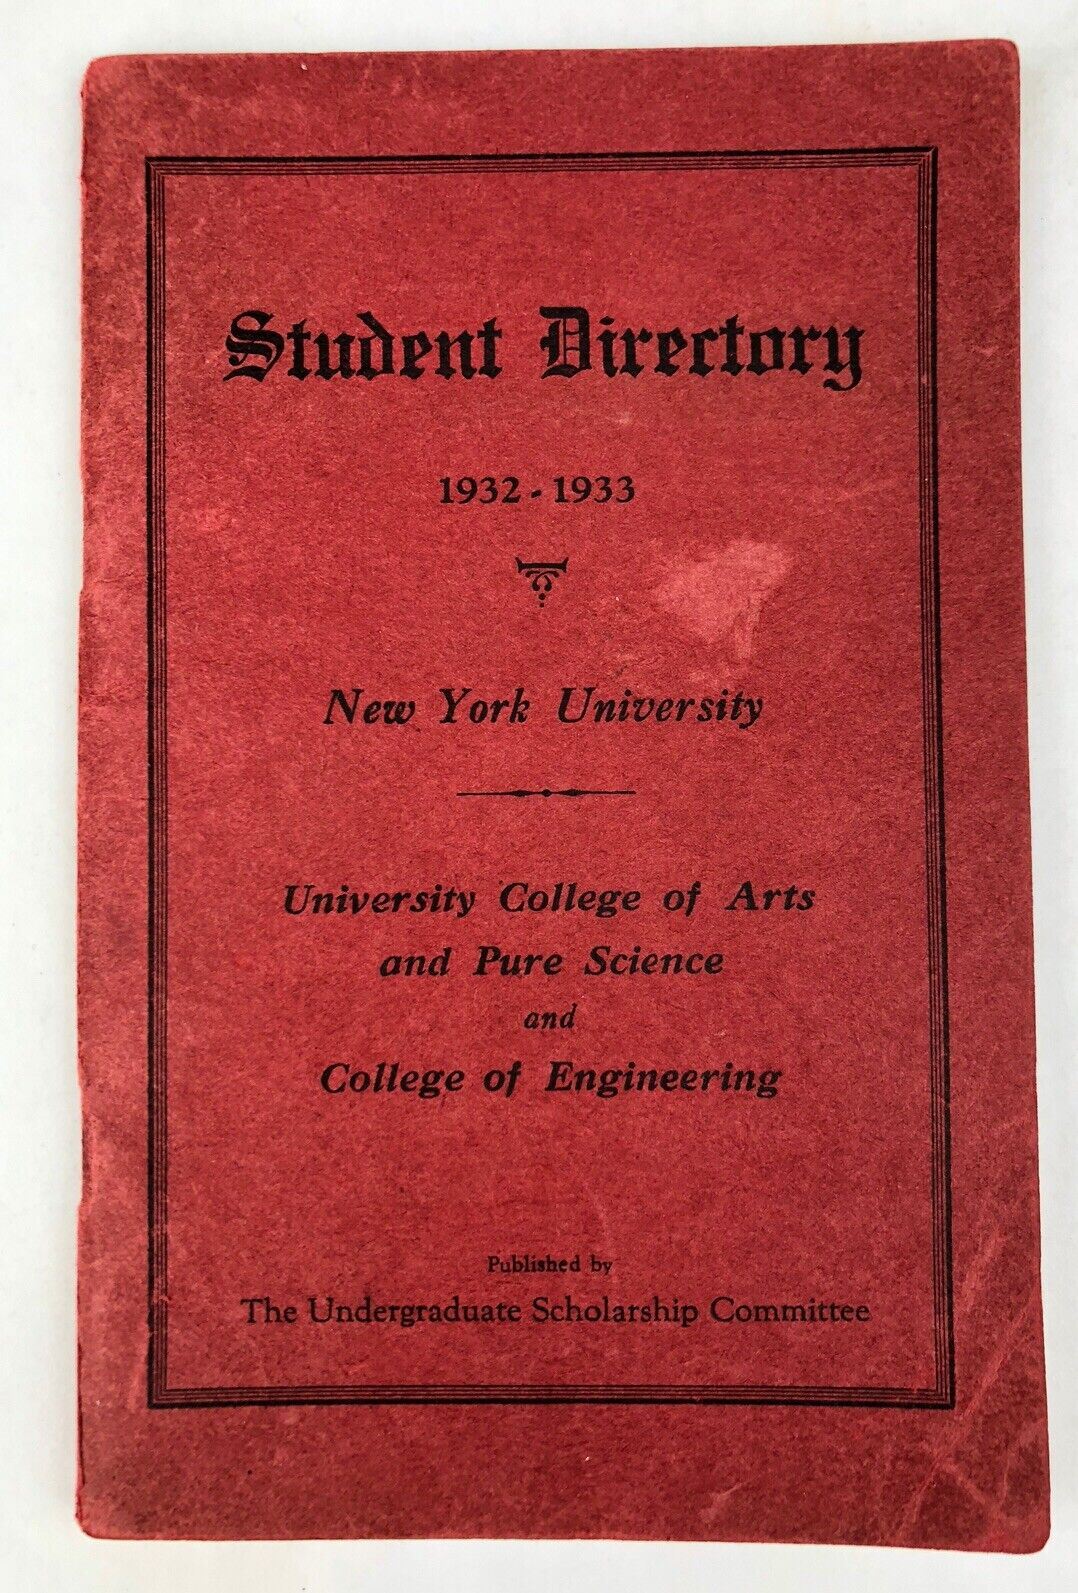 NEW YORK UNIVERSITY 1932-33 NYU Student Directory COLLEGE ARTS ENGINEERING